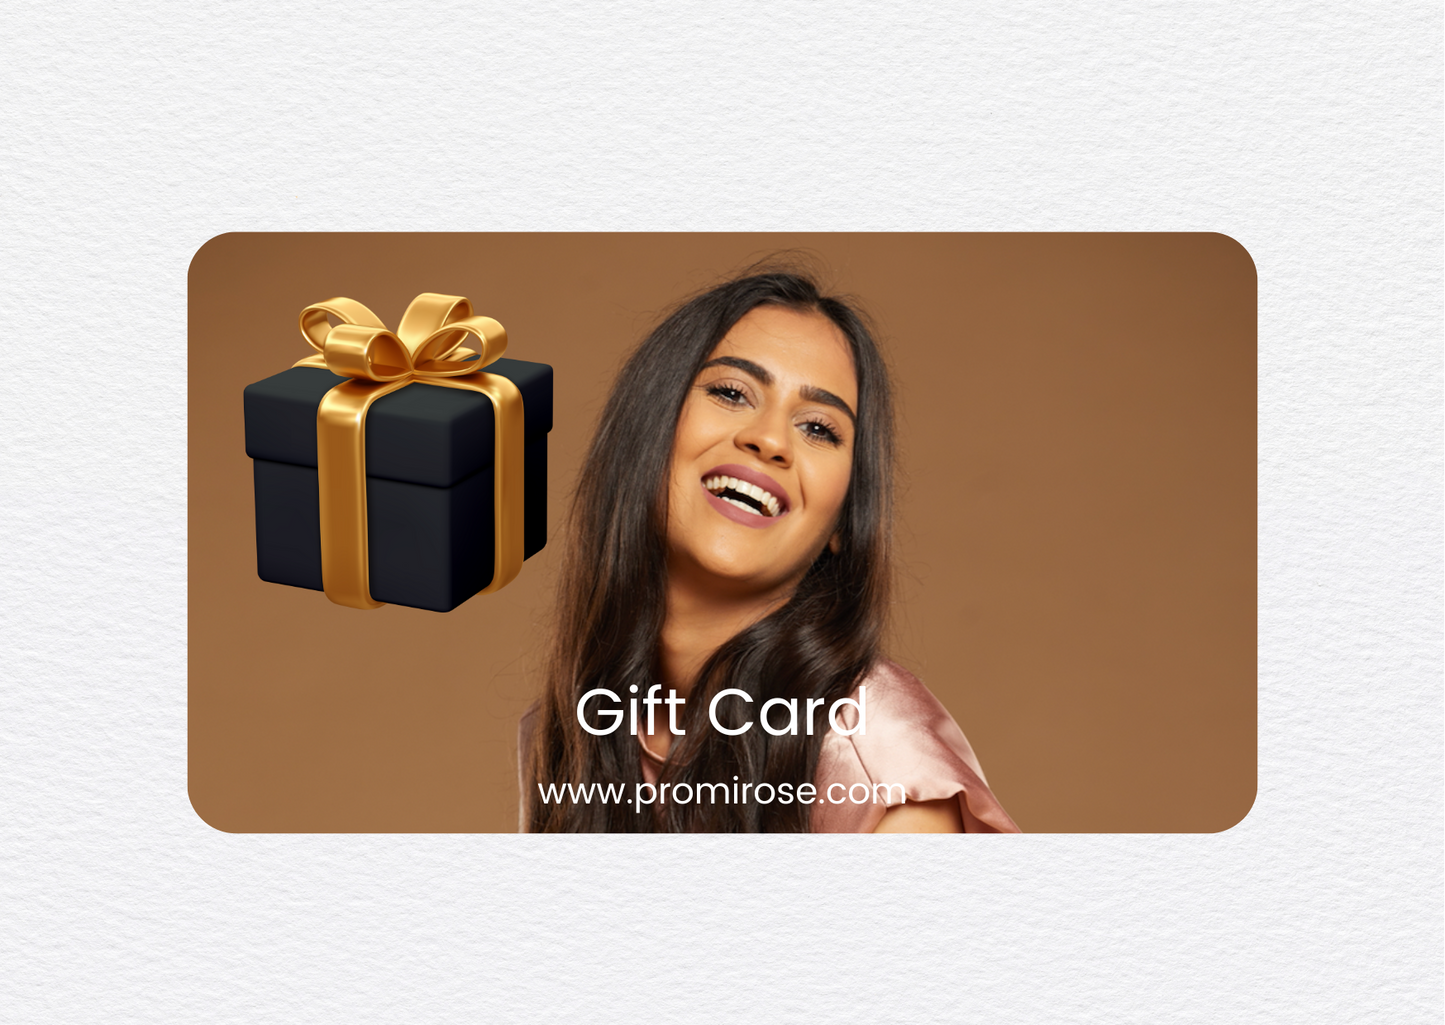 PROMIROSE gift card قسيمة شرائية من بروميروز